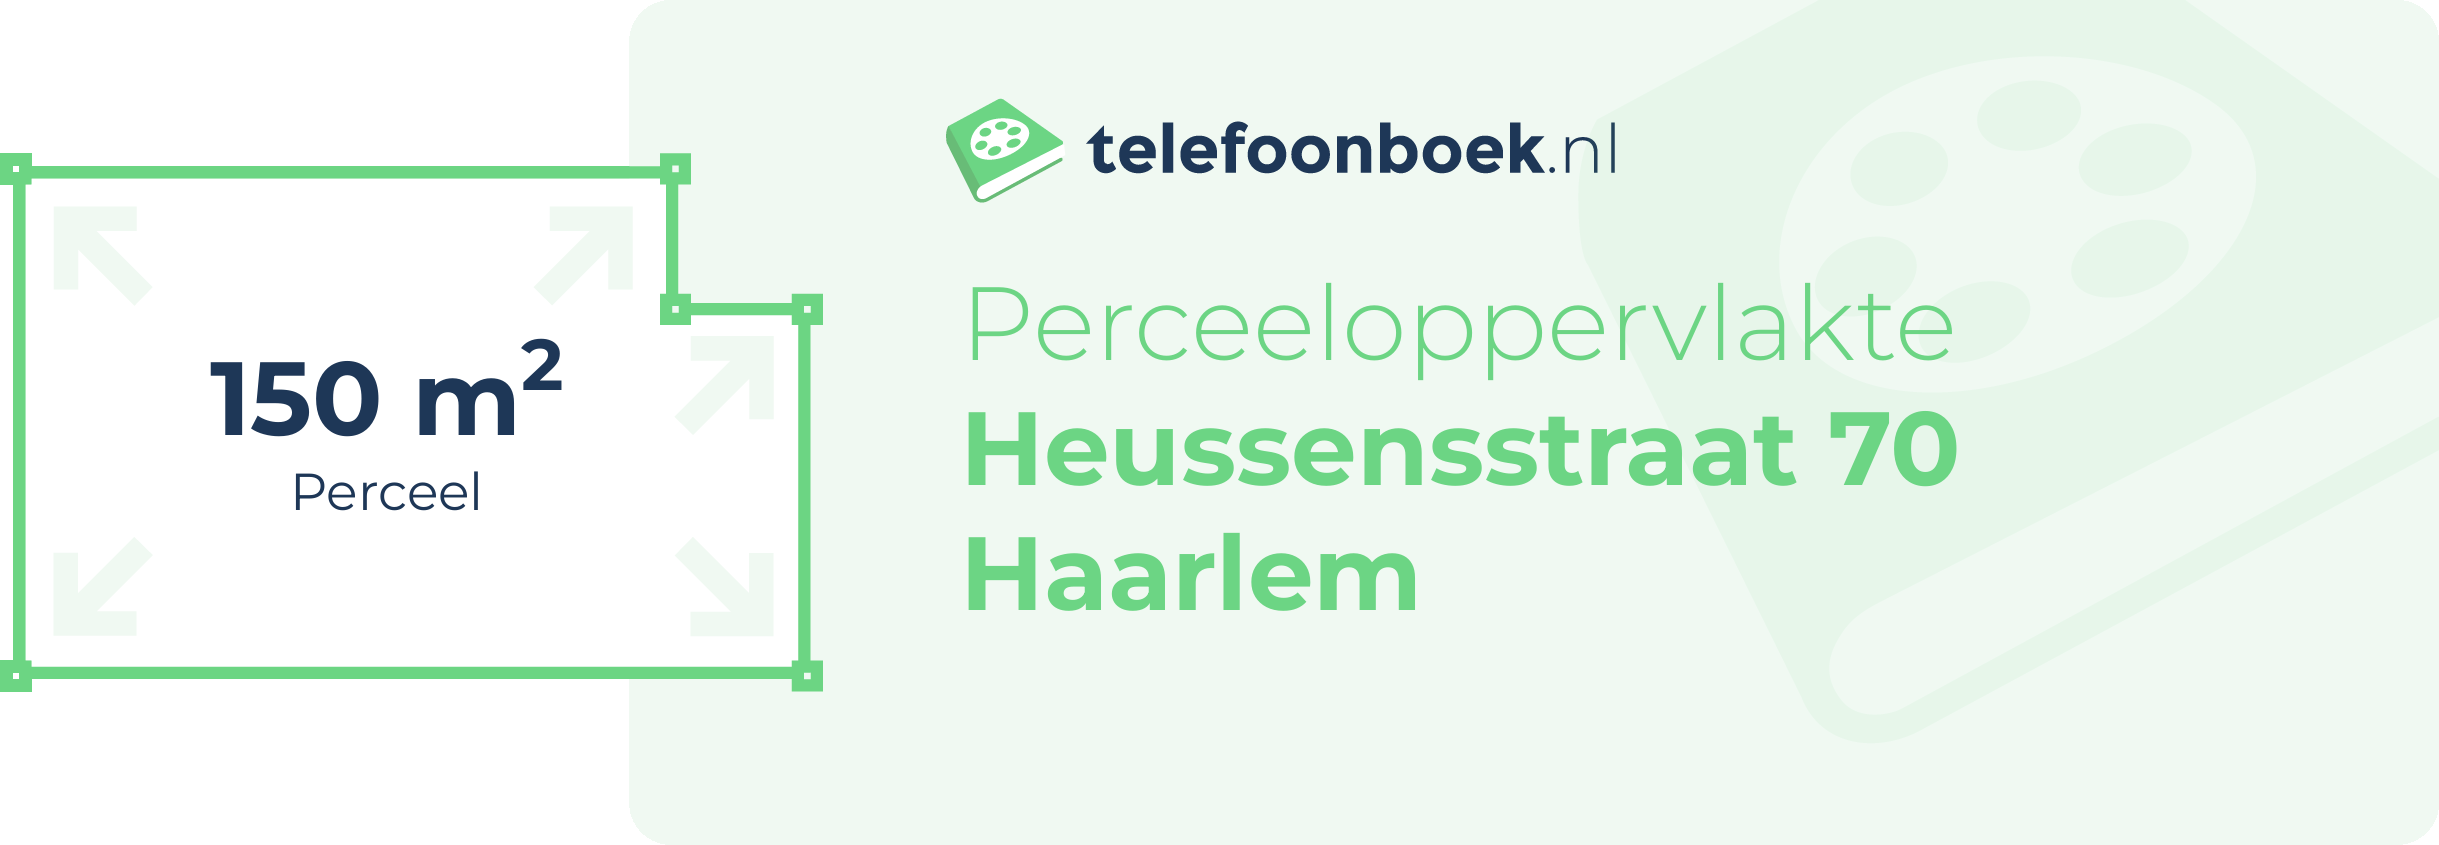 Perceeloppervlakte Heussensstraat 70 Haarlem